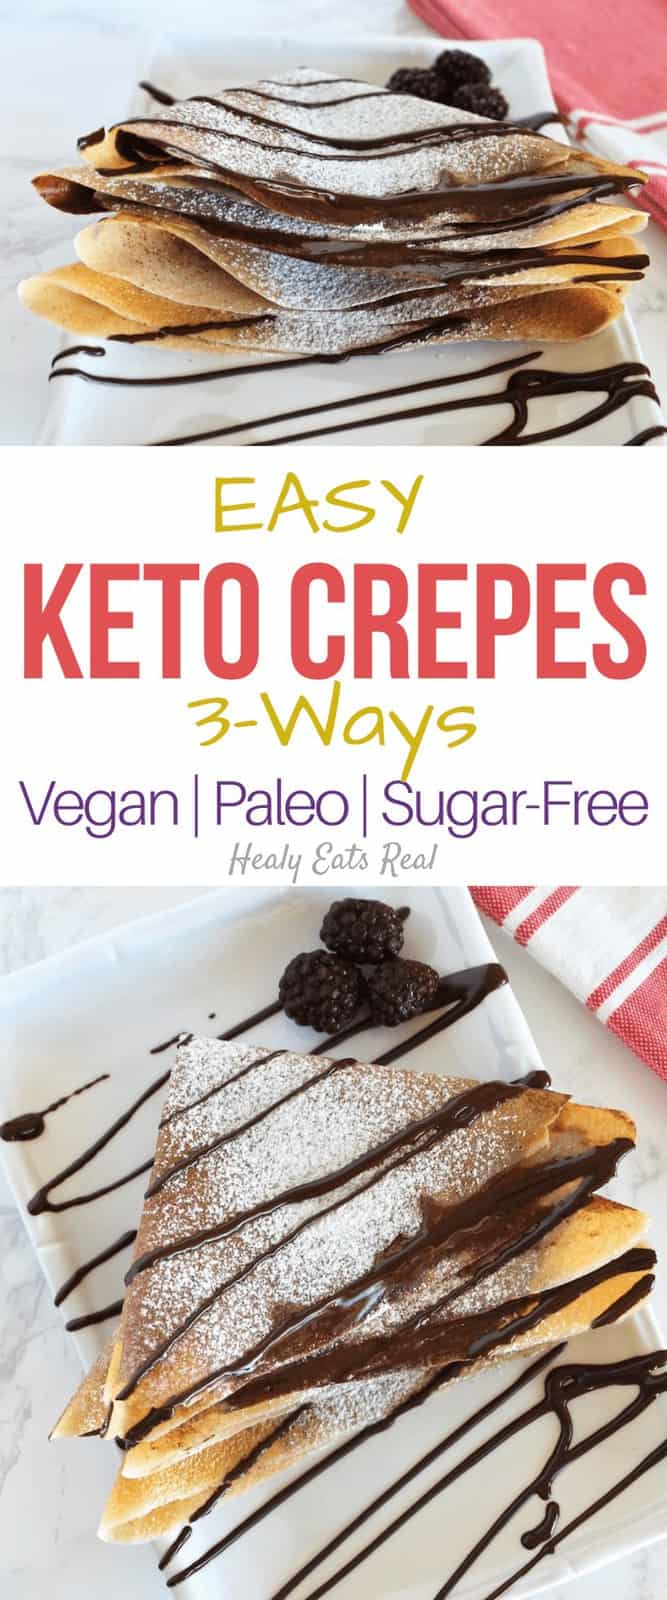 Easy Keto Crepes: 3-Ways (Paleo, Vegan, Low Carb)